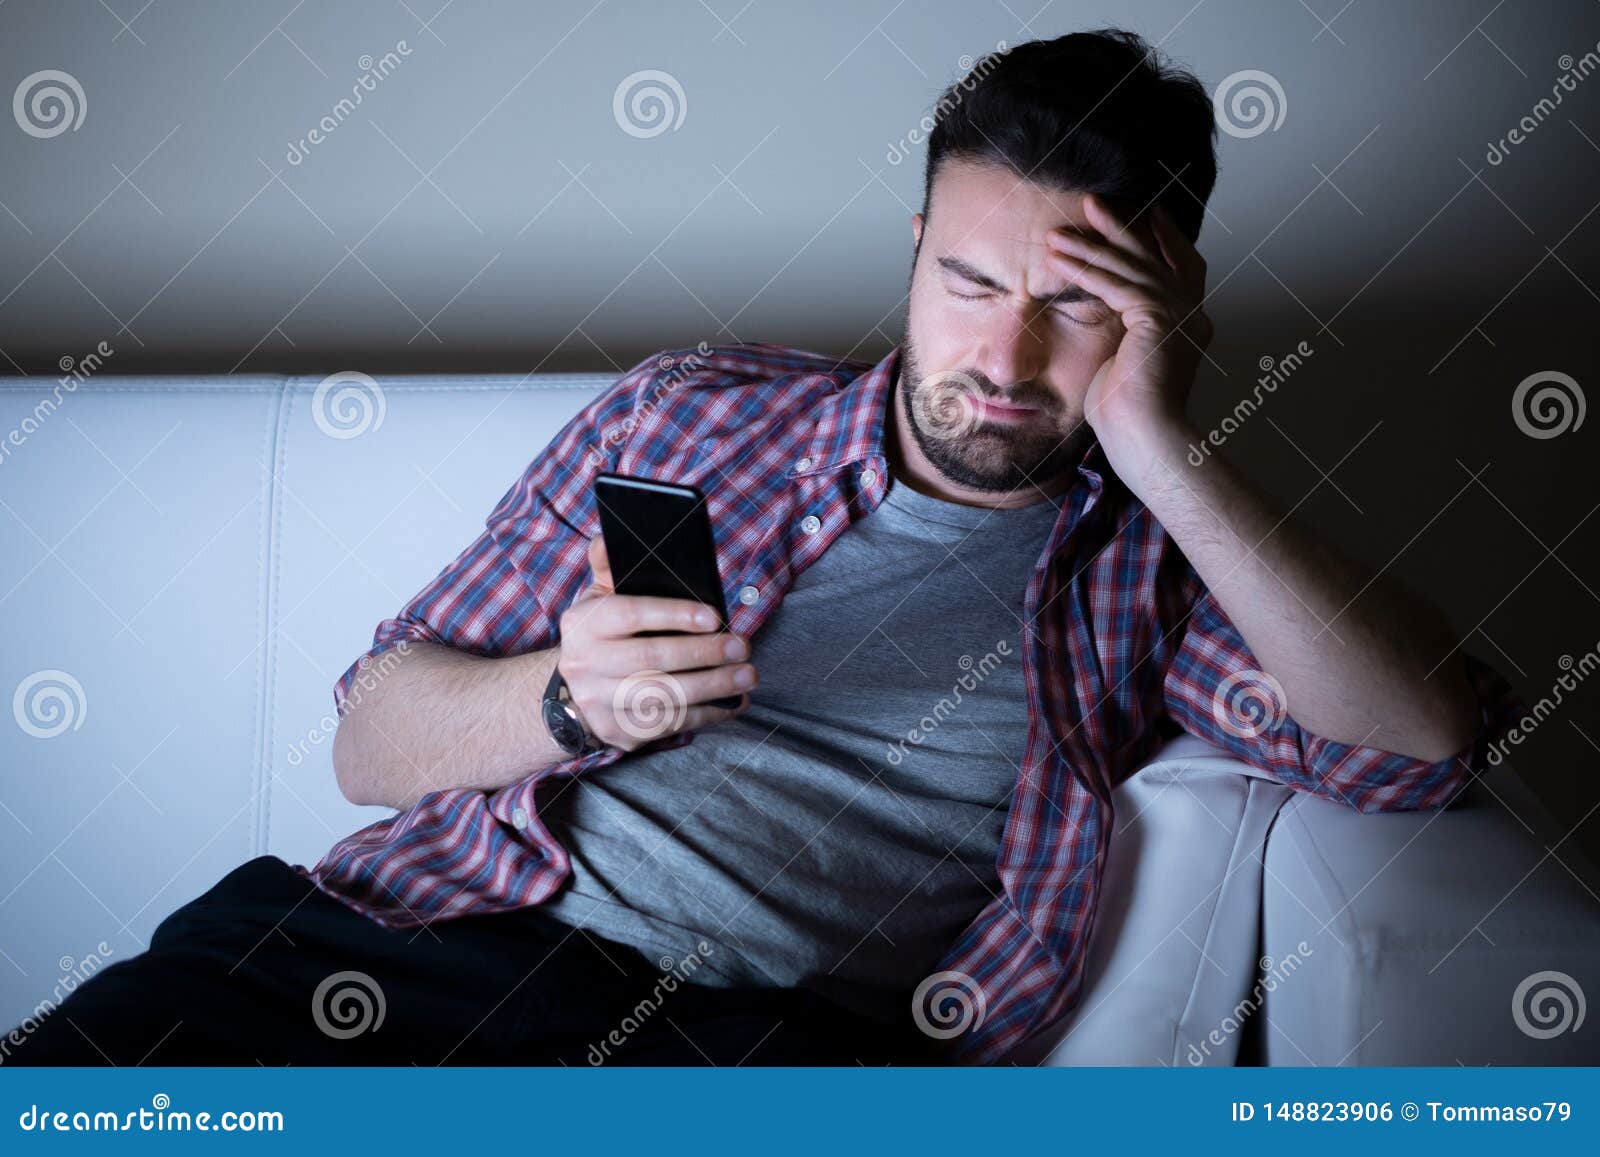 Man Feeling Depressed Using Phone At Night Stock Photo